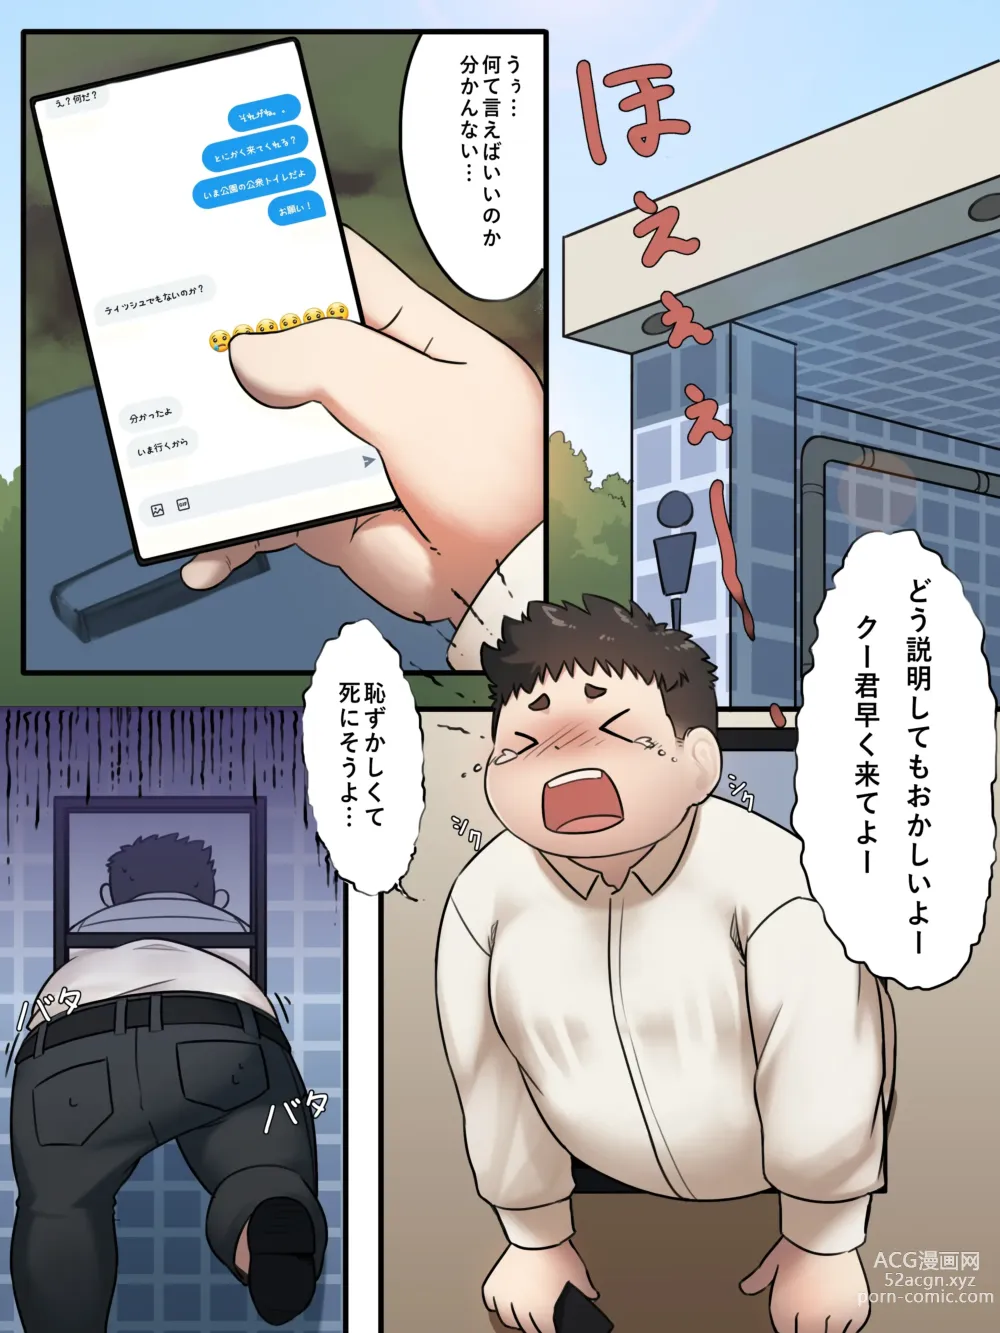 Page 2 of doujinshi Omoide no Present